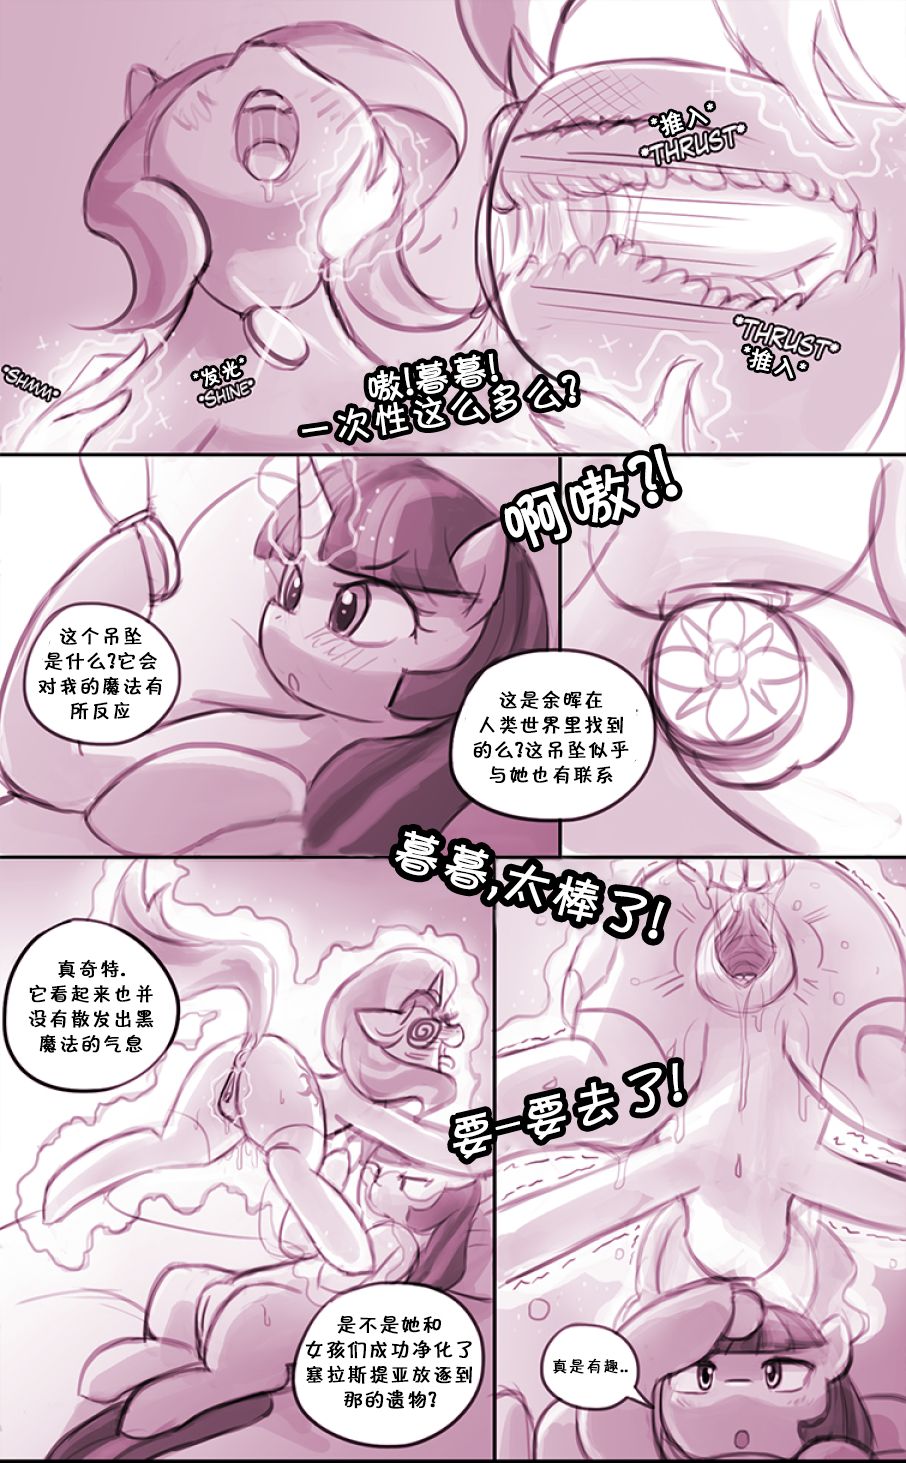 [Lumineko] Homesick | 吾心归处是吾乡 (My Little Pony: Friendship is Magic) [Chinese] [PhoenixTranslation] 【Lumineko】【PhoenixTranslation】Homesick